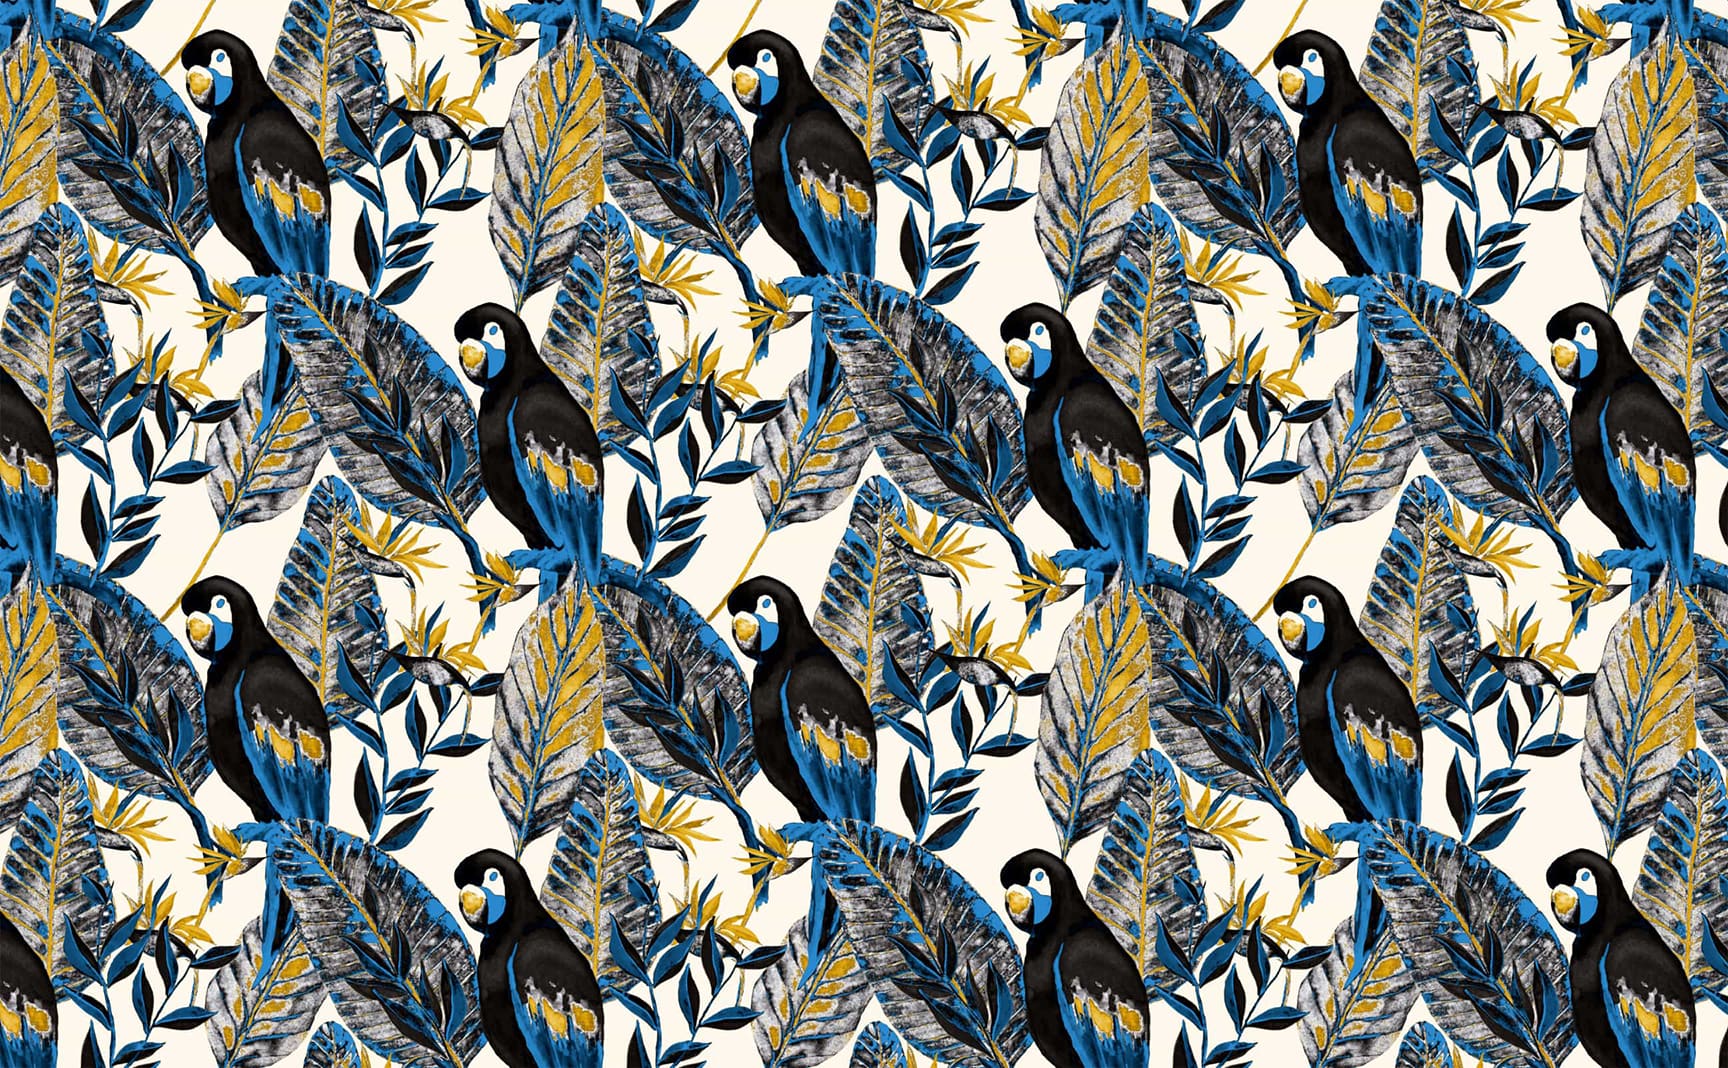 Macaw Botanica Wallpaper Pattern by Walls Need Love®